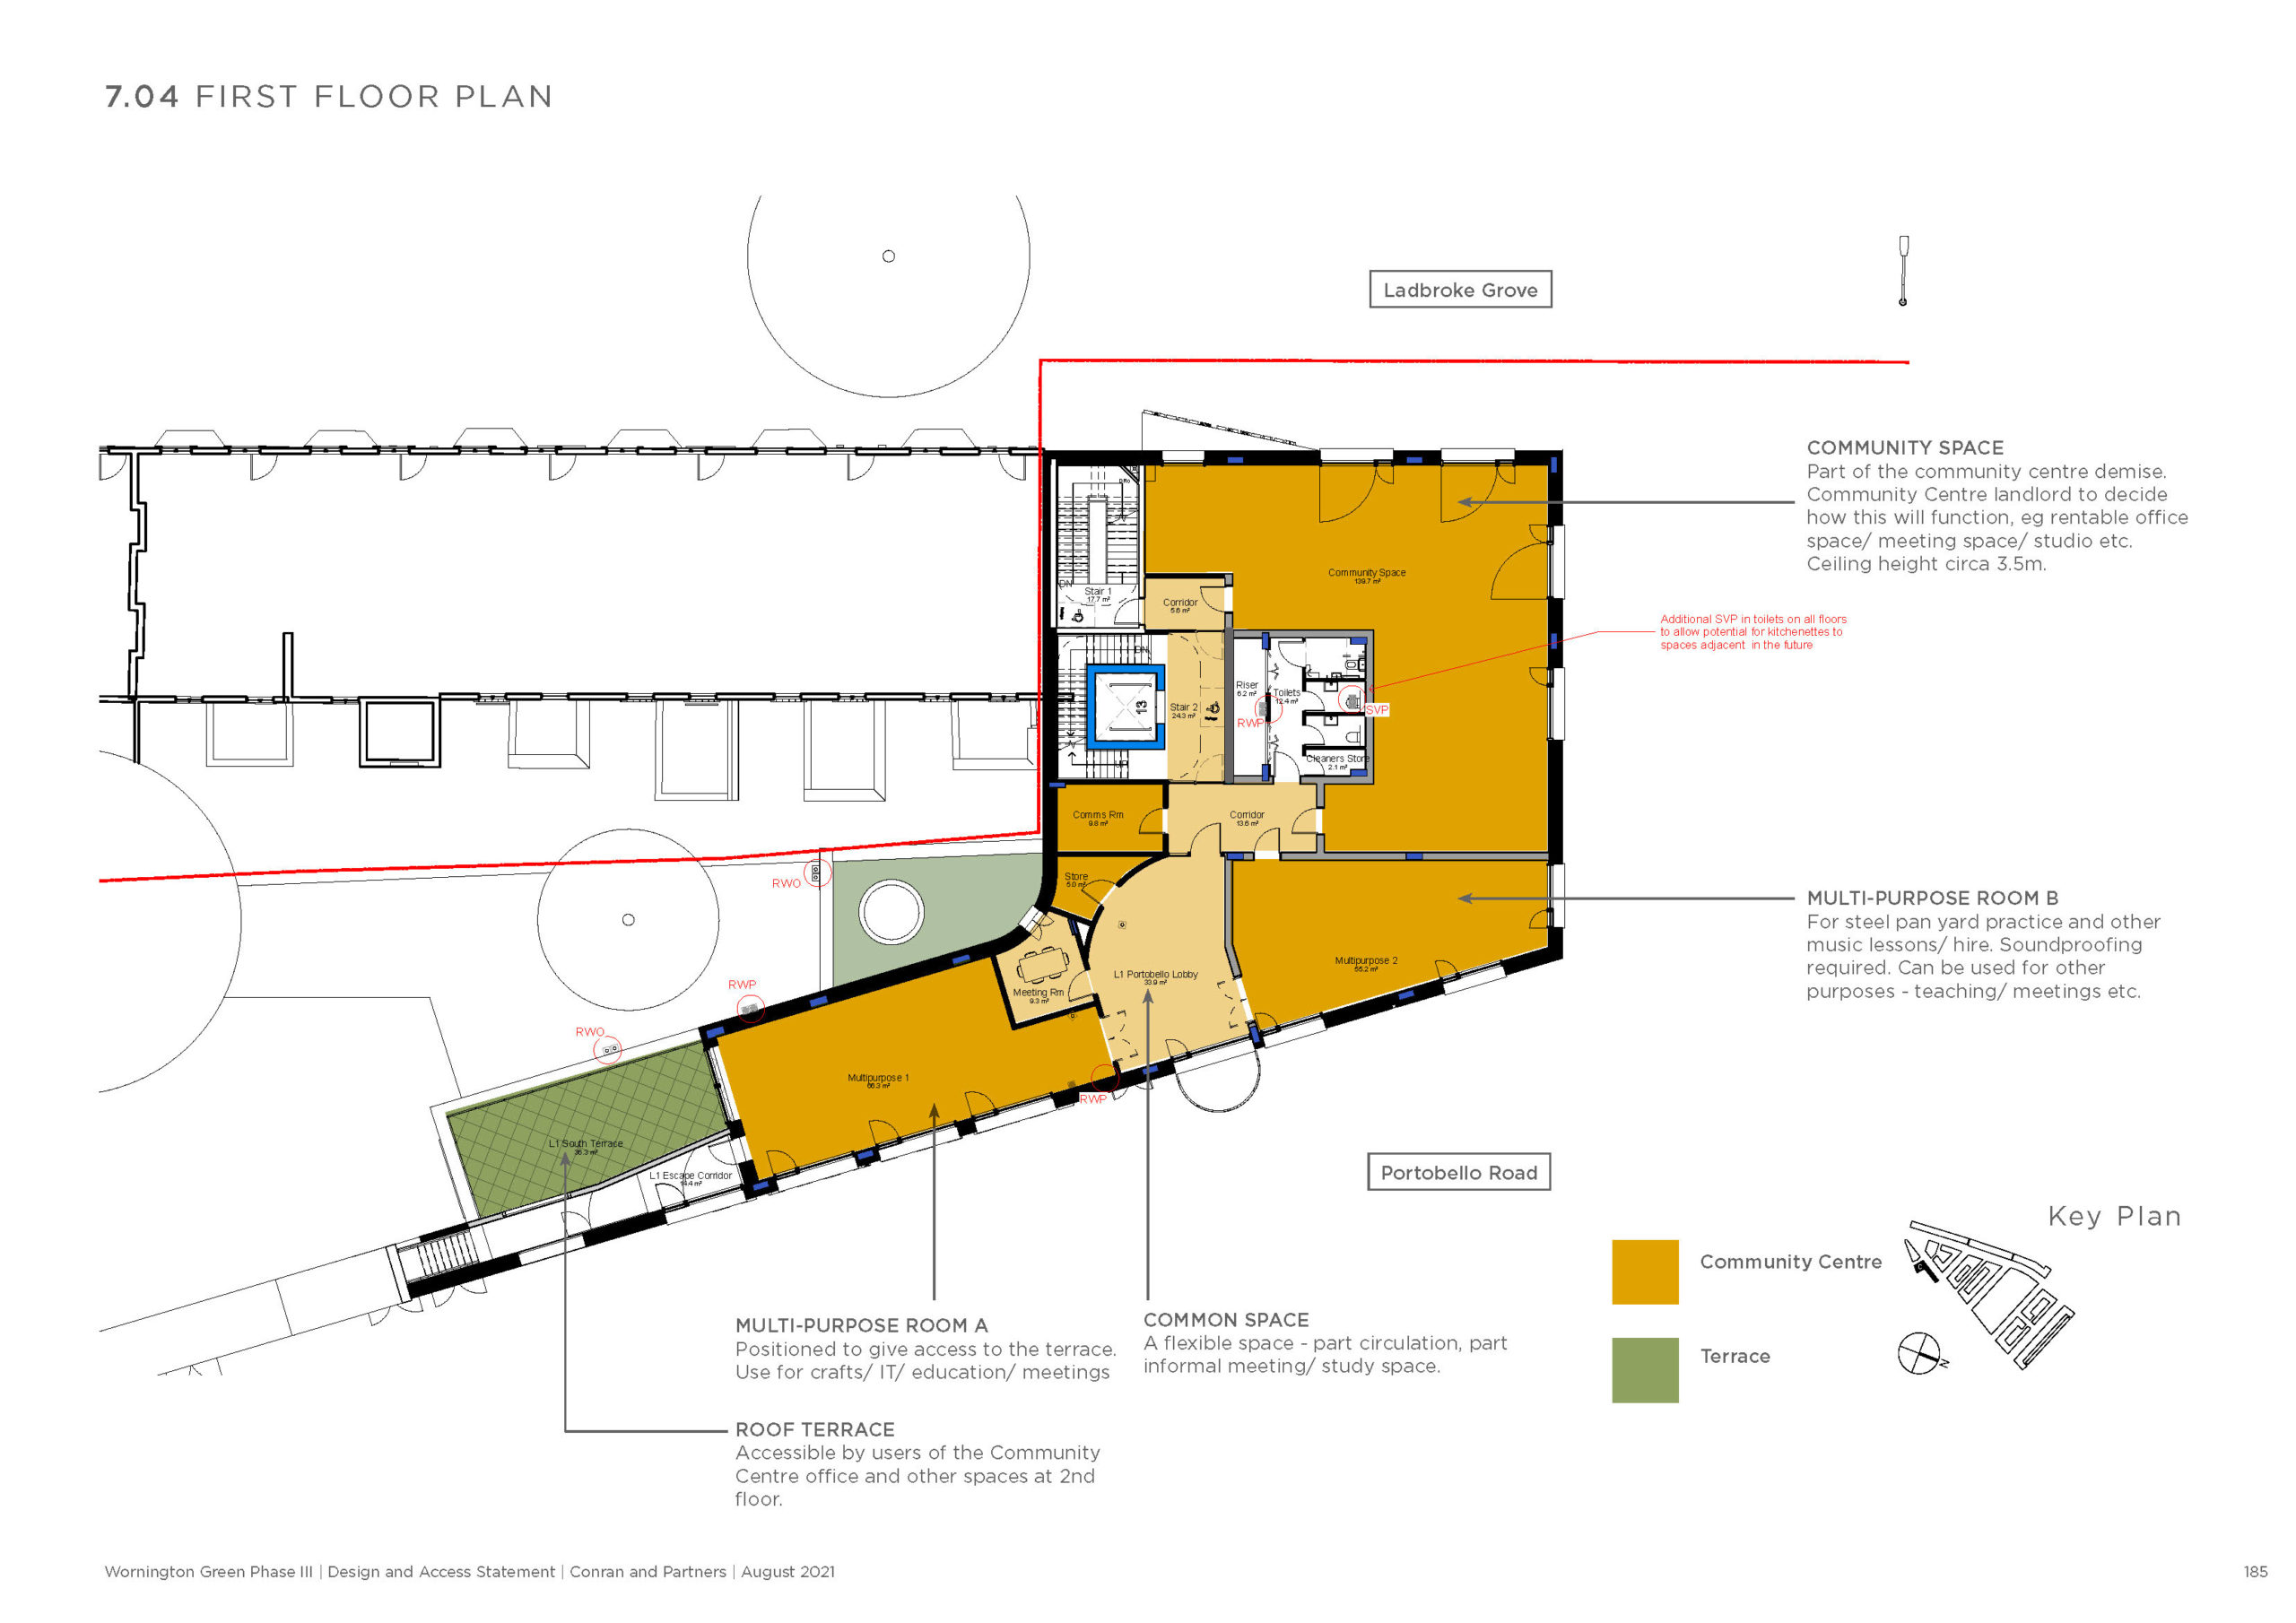 Community Centre - First floor plan